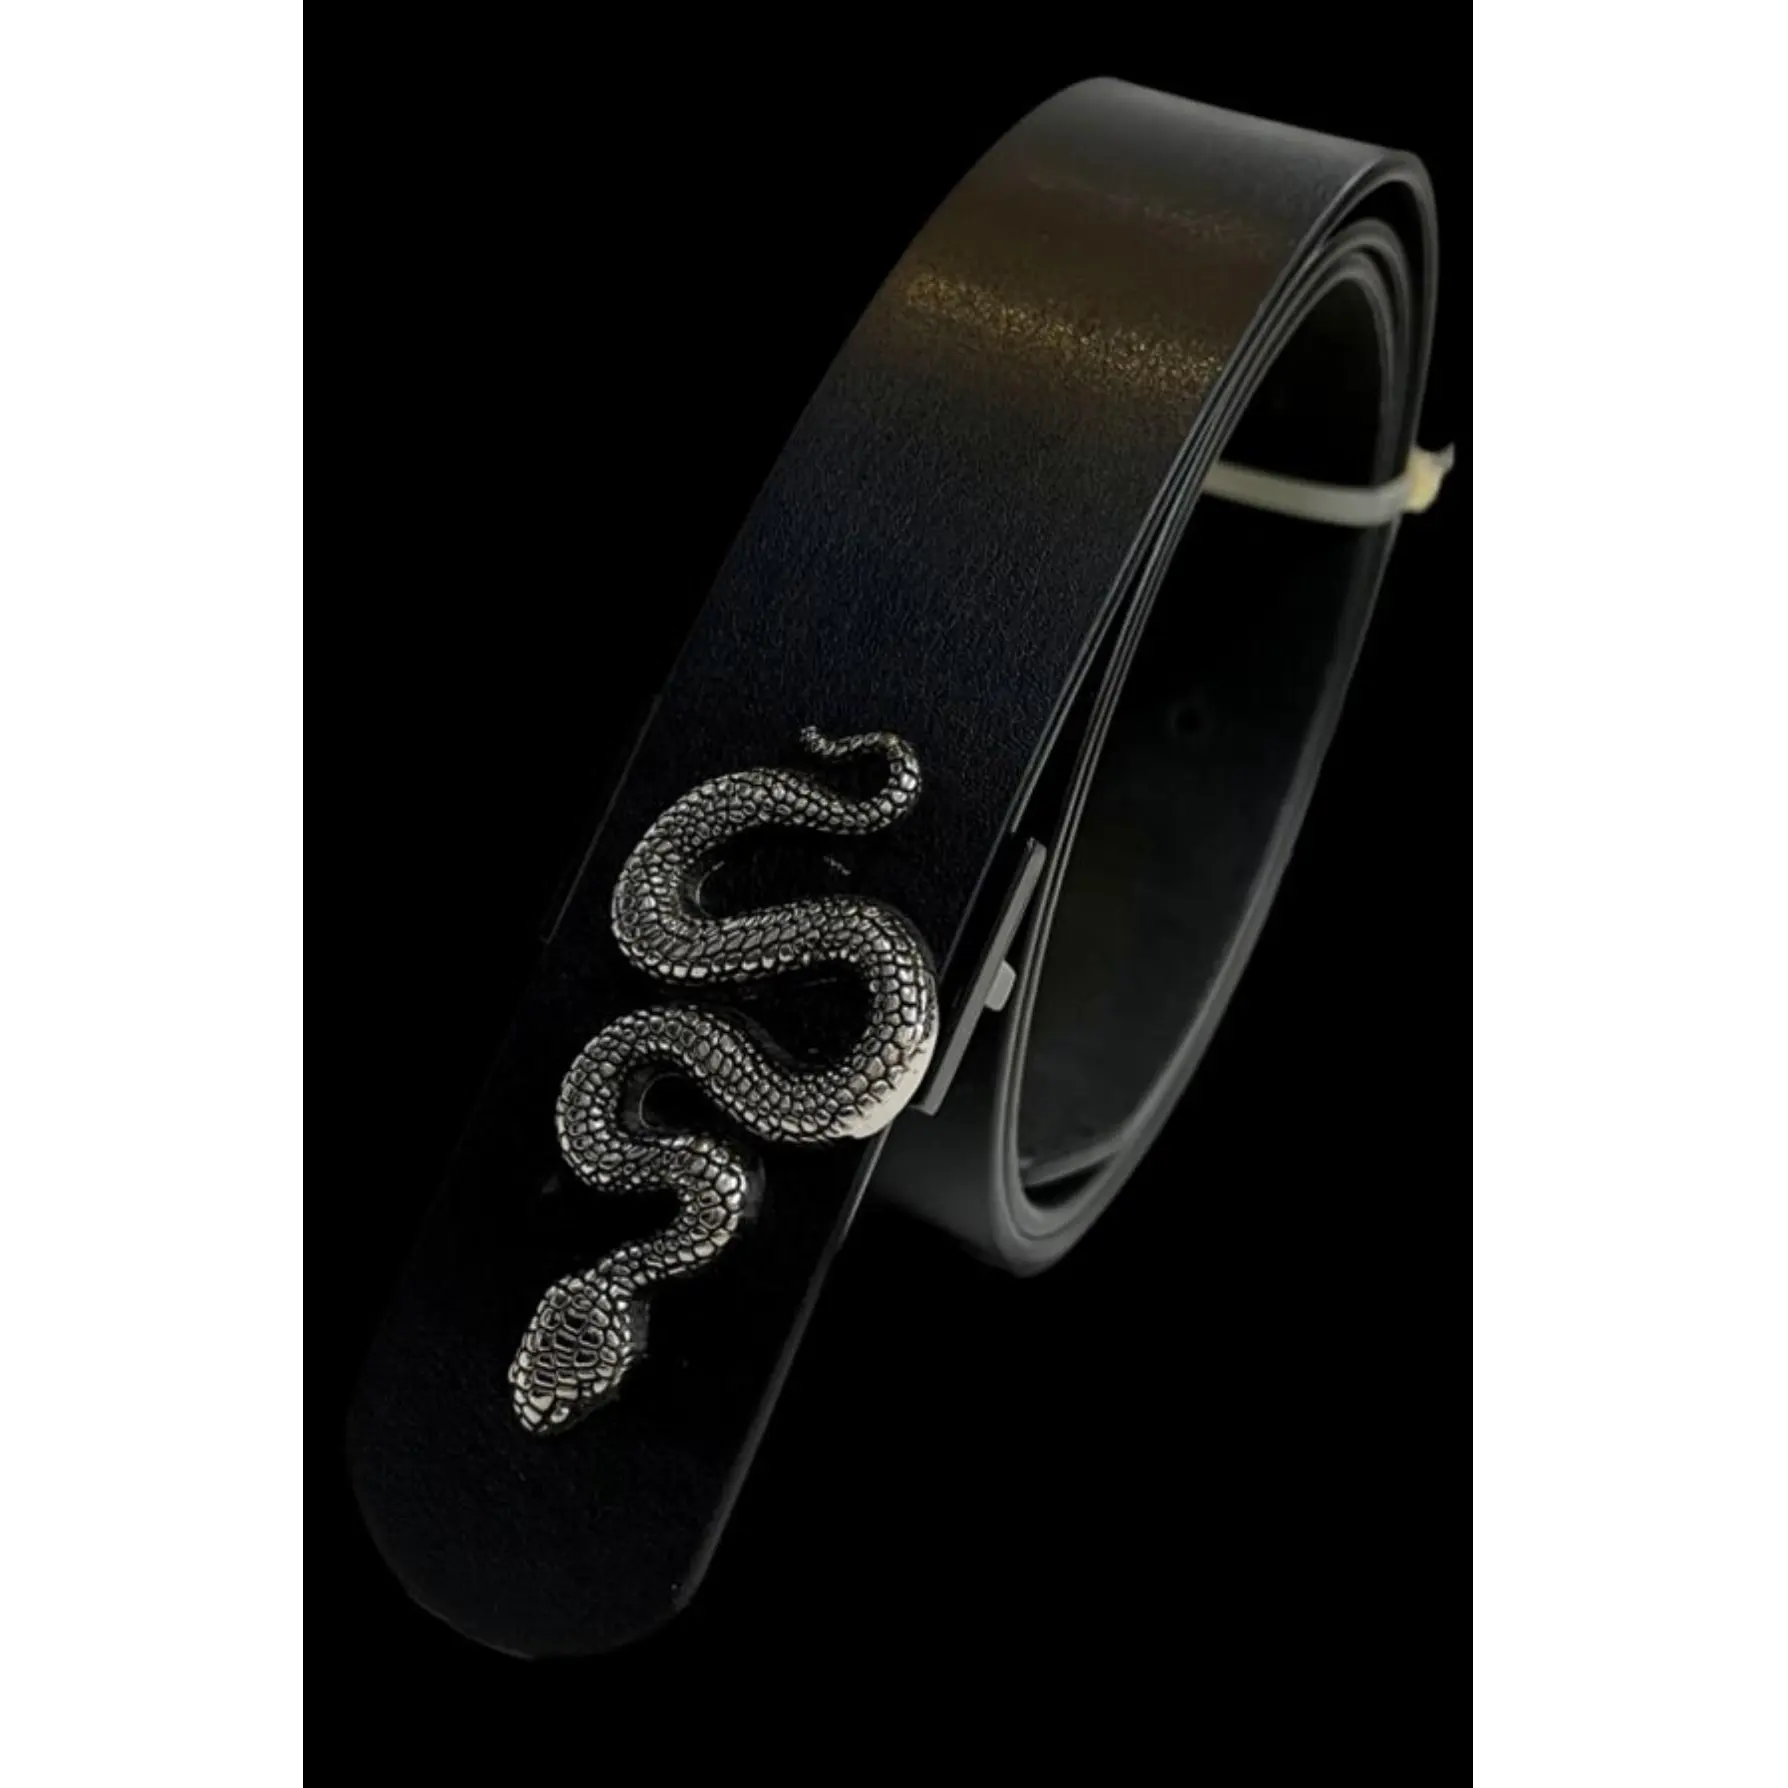 silver gun gold luxury western hebilla snake buckle for belt genuine leather belts and accessories